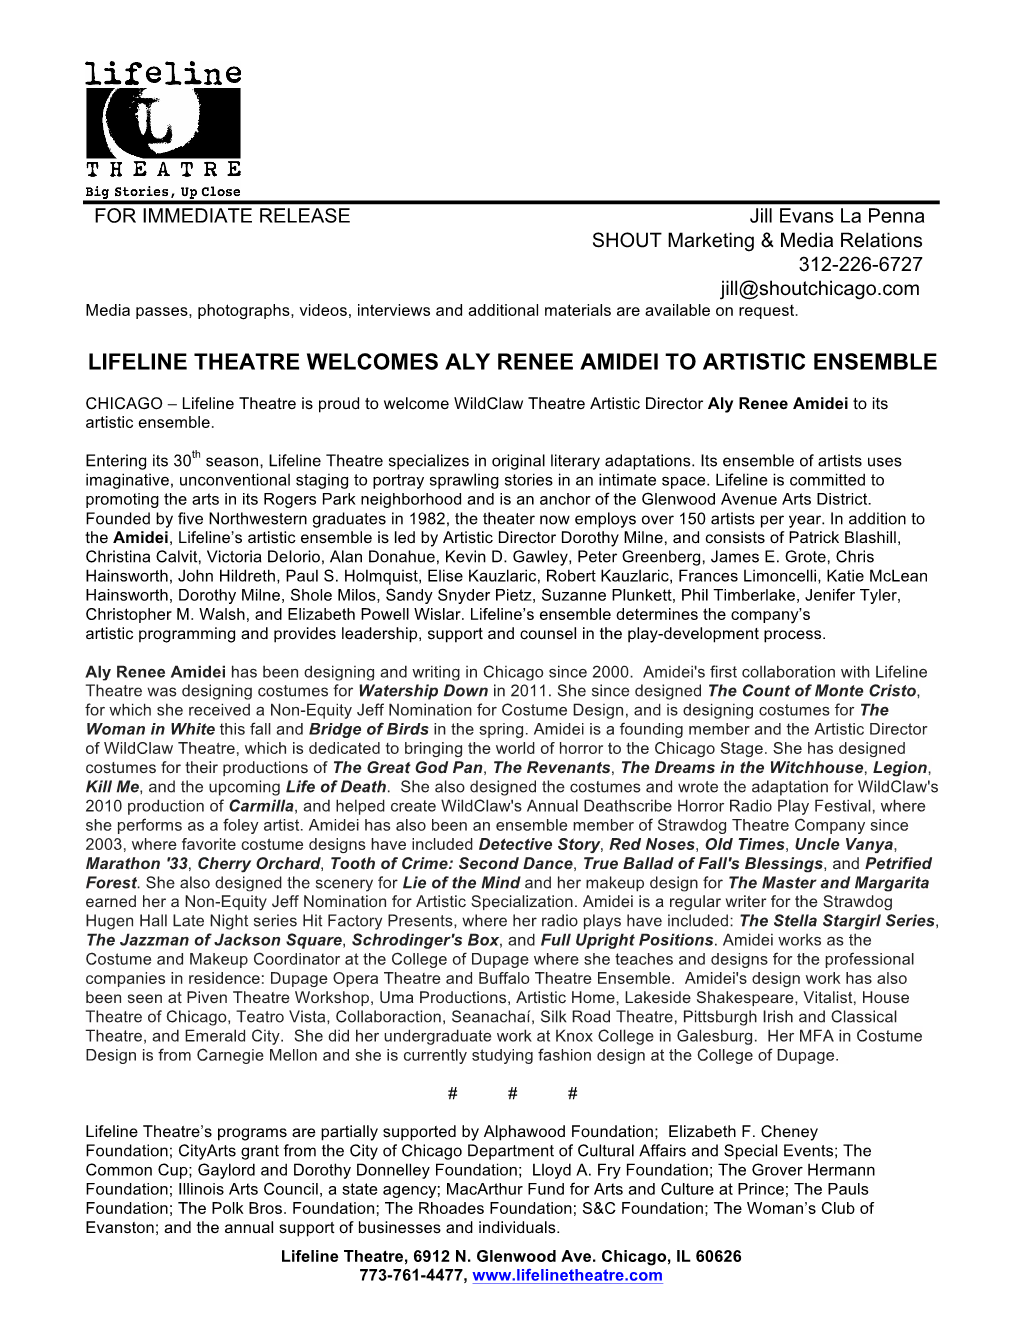 Lifeline Theatre Welcomes Aly Renee Amidei to Artistic Ensemble